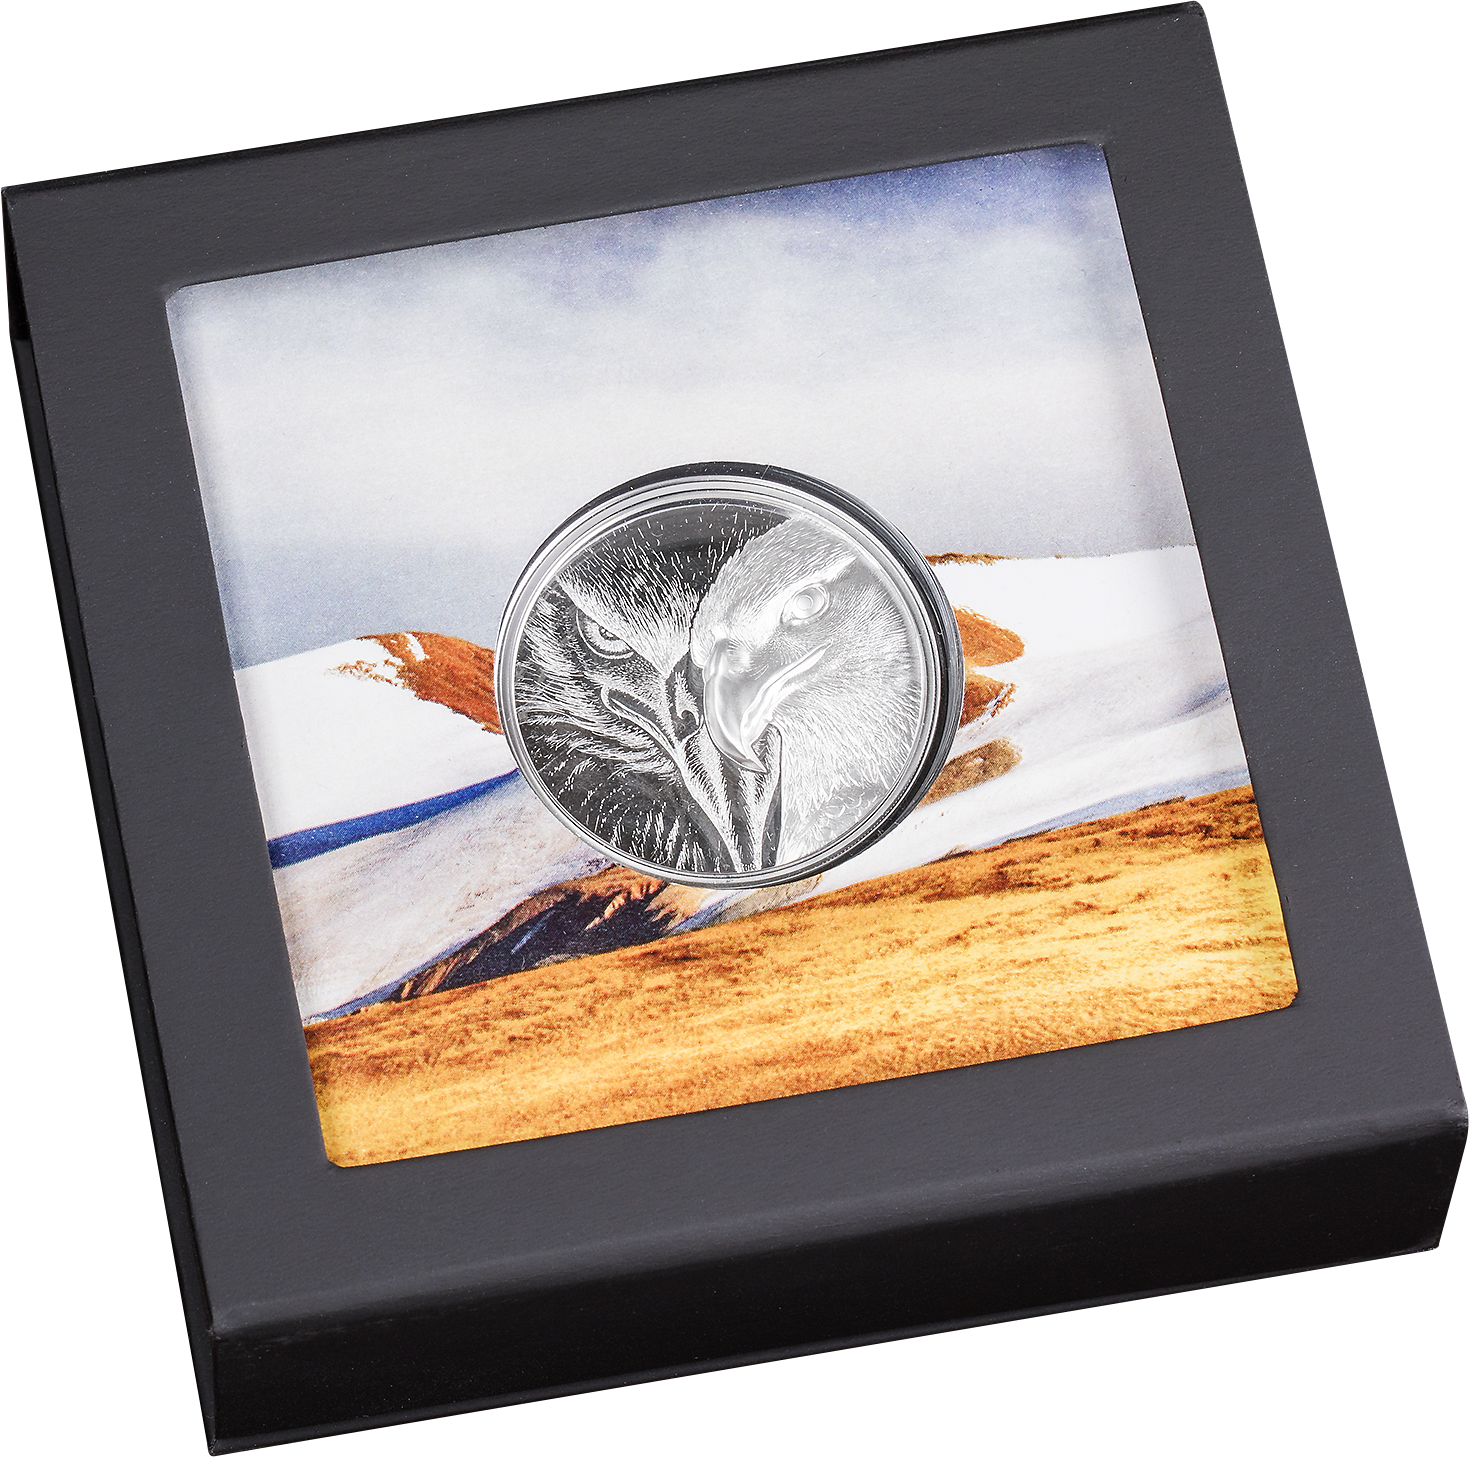 Koop munten online - Zilveren munt - Majestic eagle - Limited edition box